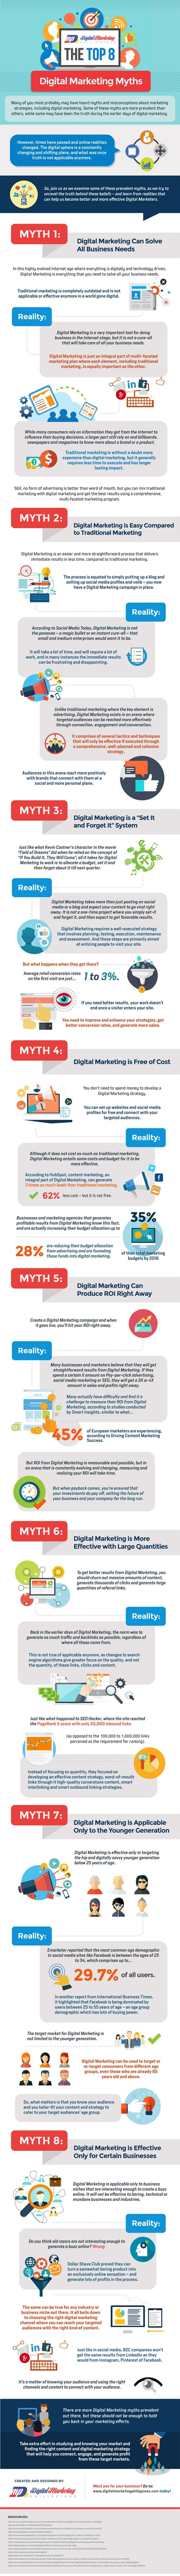 marketing myths info